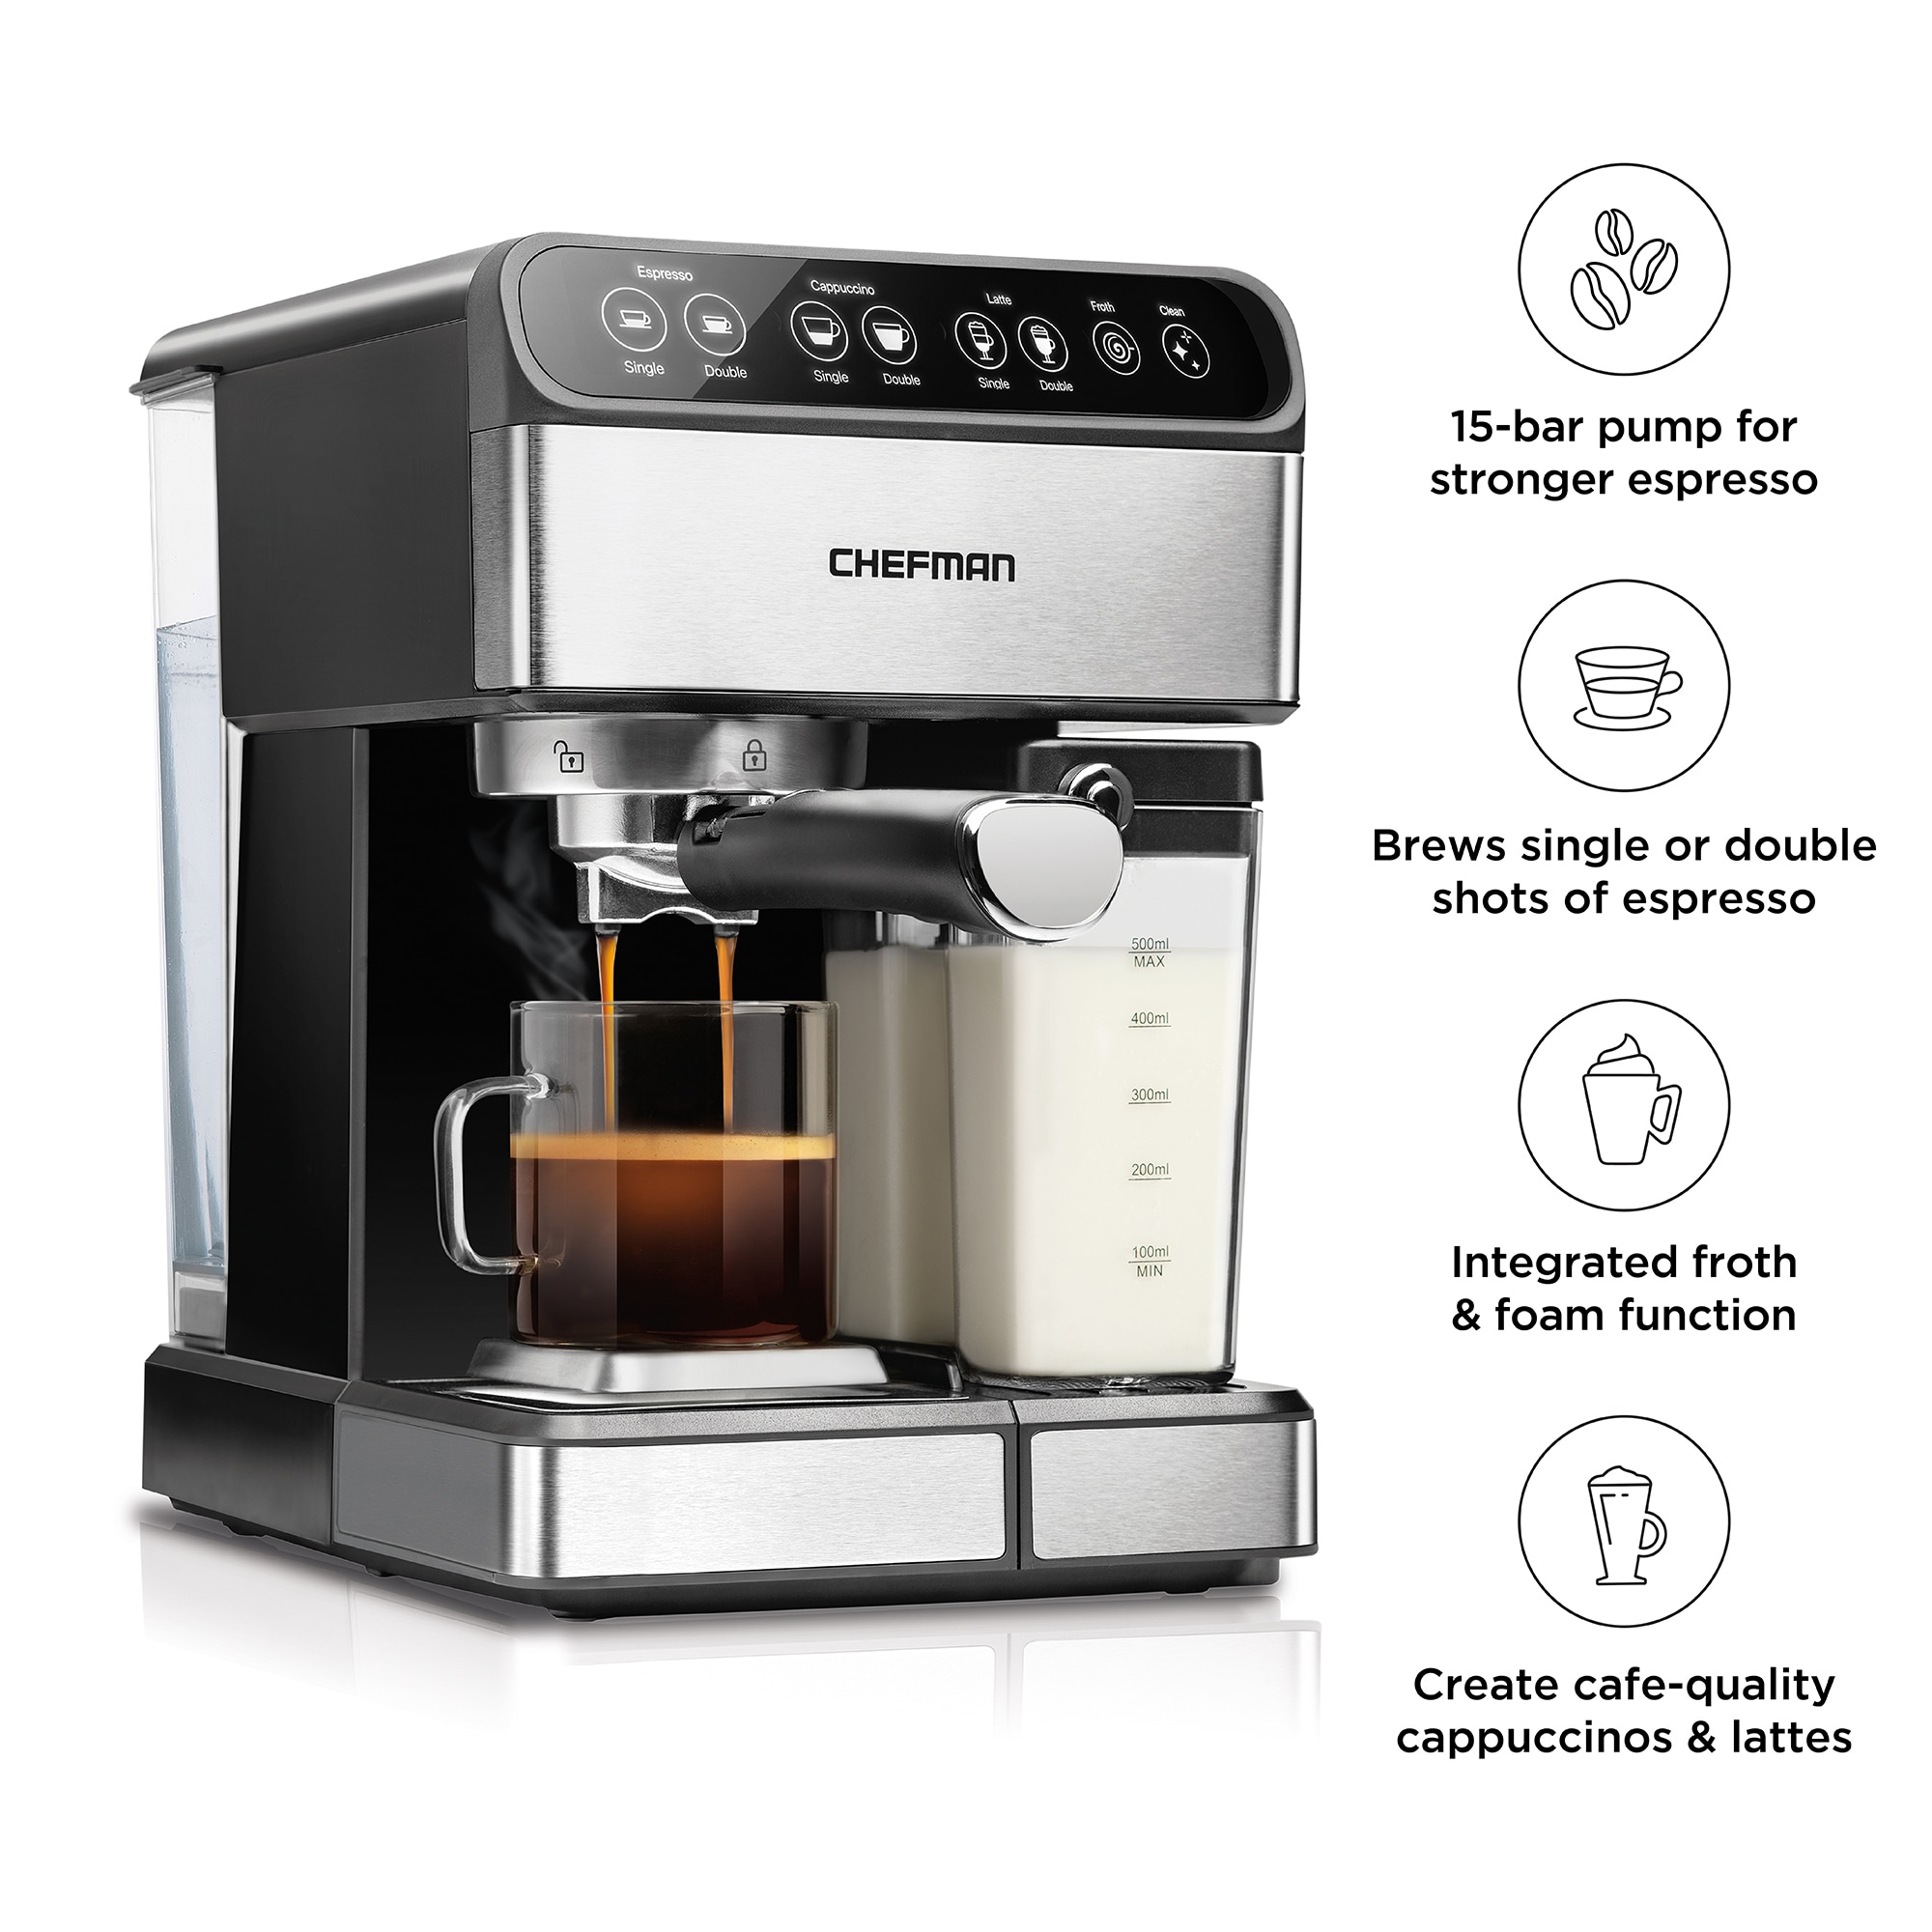 100 Cup Coffee Maker - TAYLOR RENTAL Bradenton